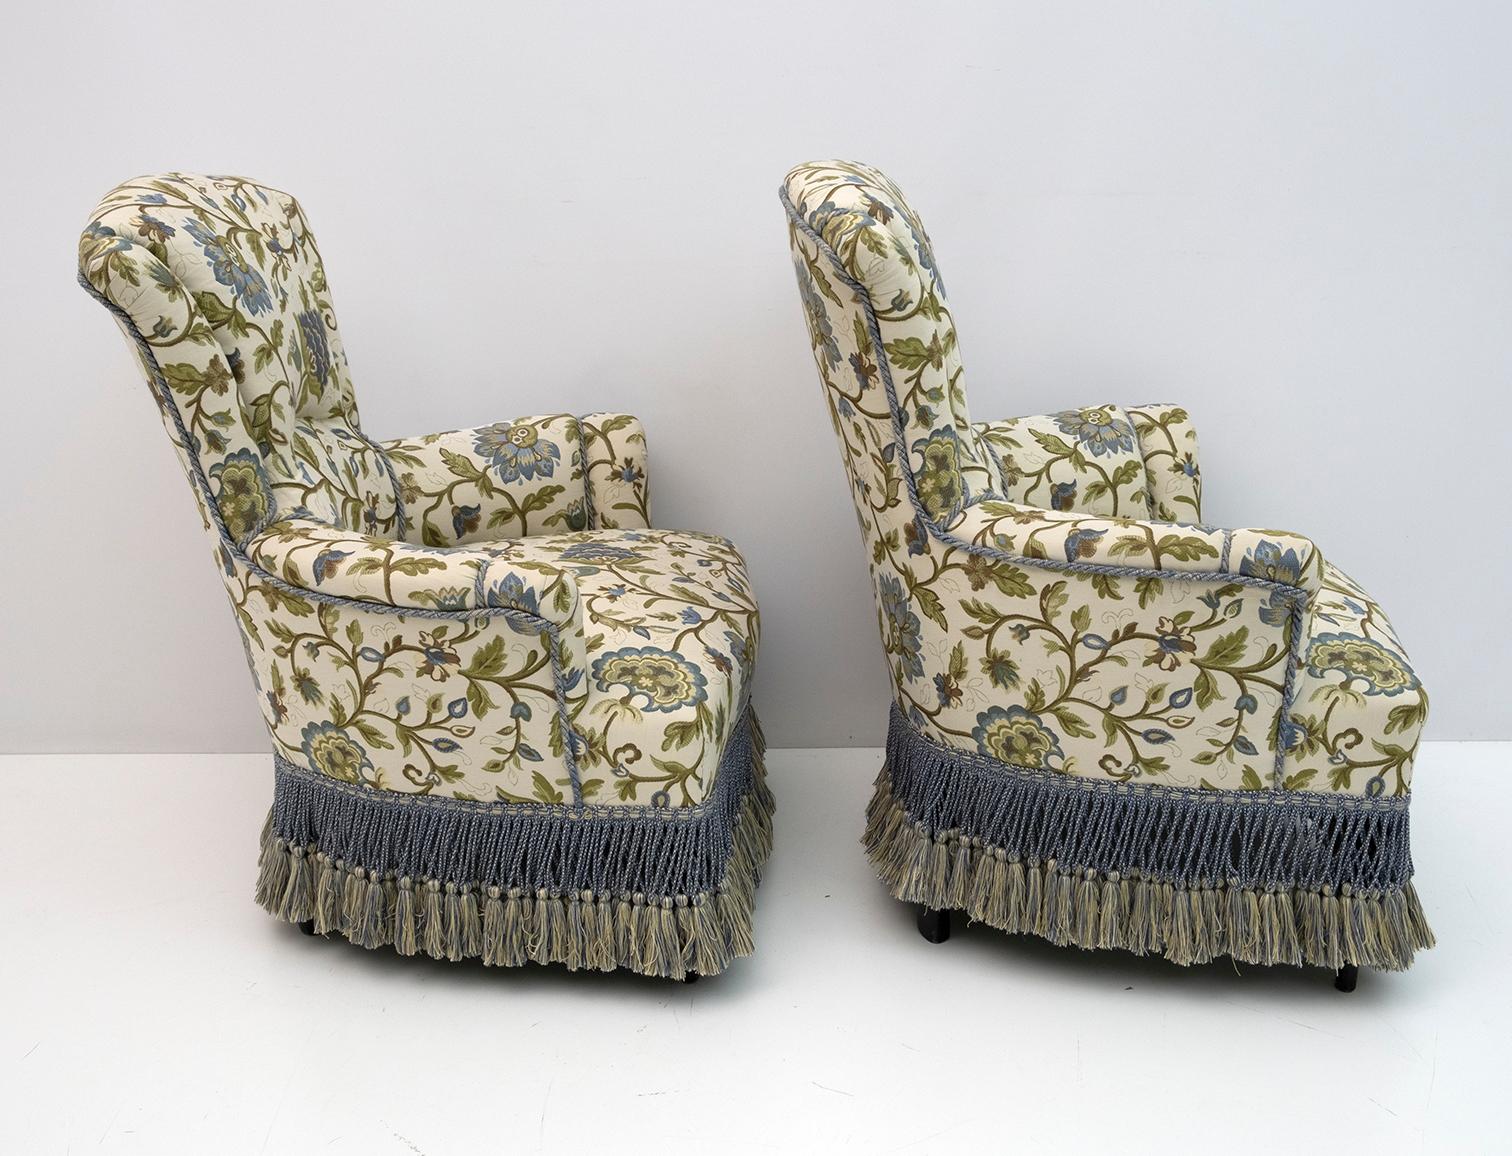 Ein Paar seltene Napoleon III.-Brokat-Sessel aus dem 19. Jahrhundert (Spätes 19. Jahrhundert) im Angebot